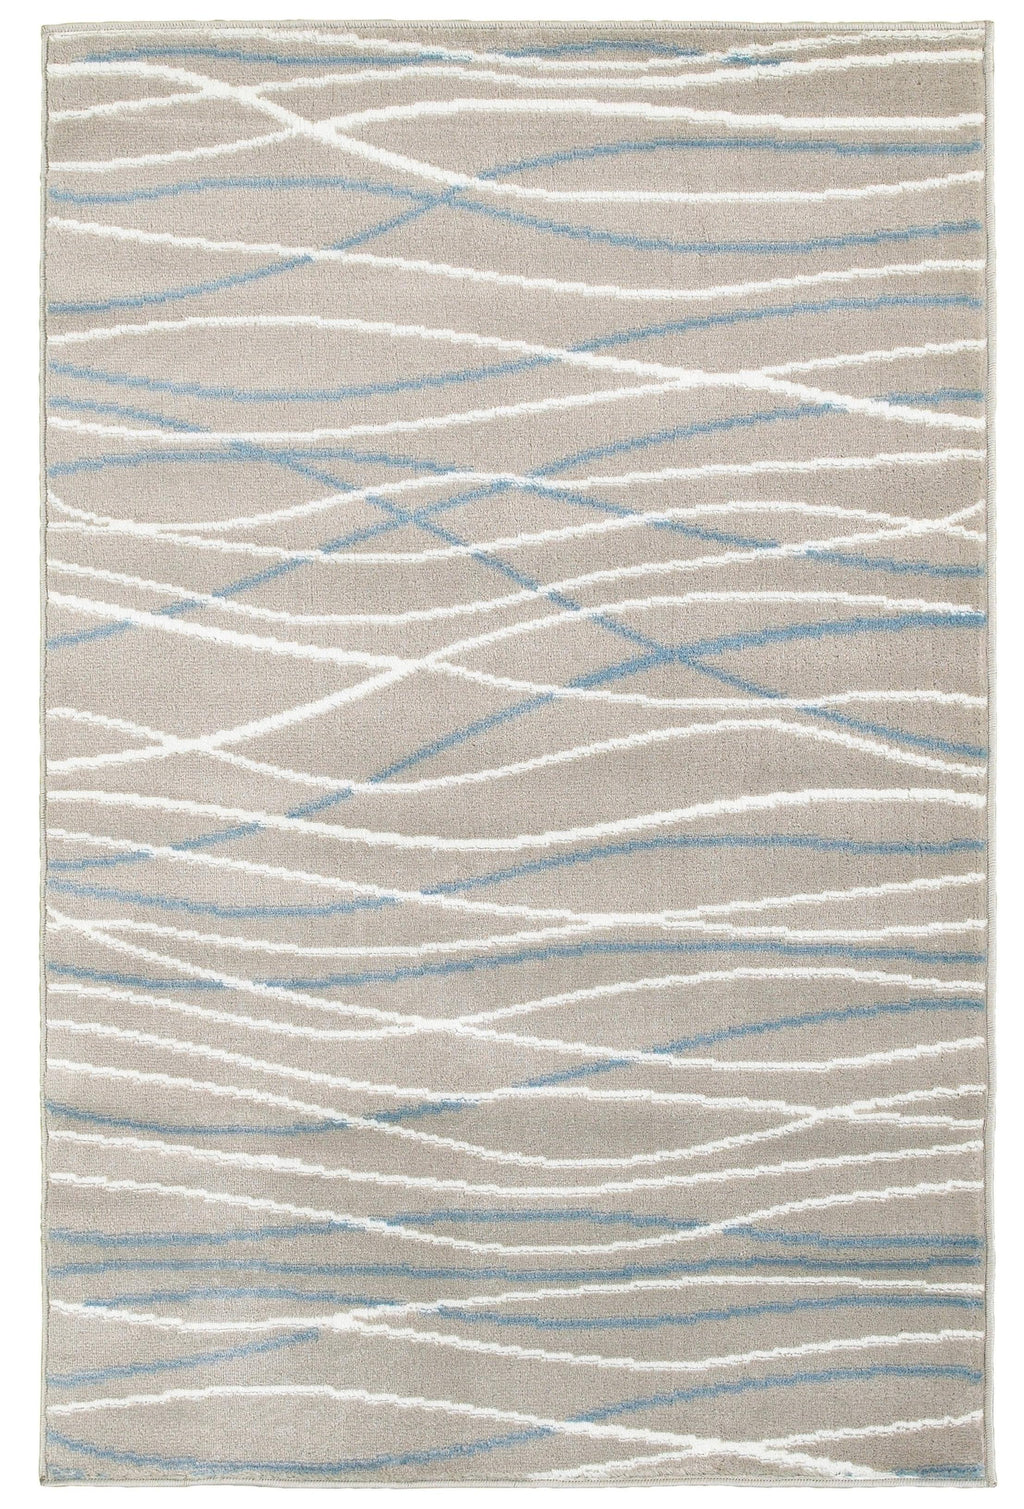 5’ x 7’ Gray Contemporary Waves Area Rug